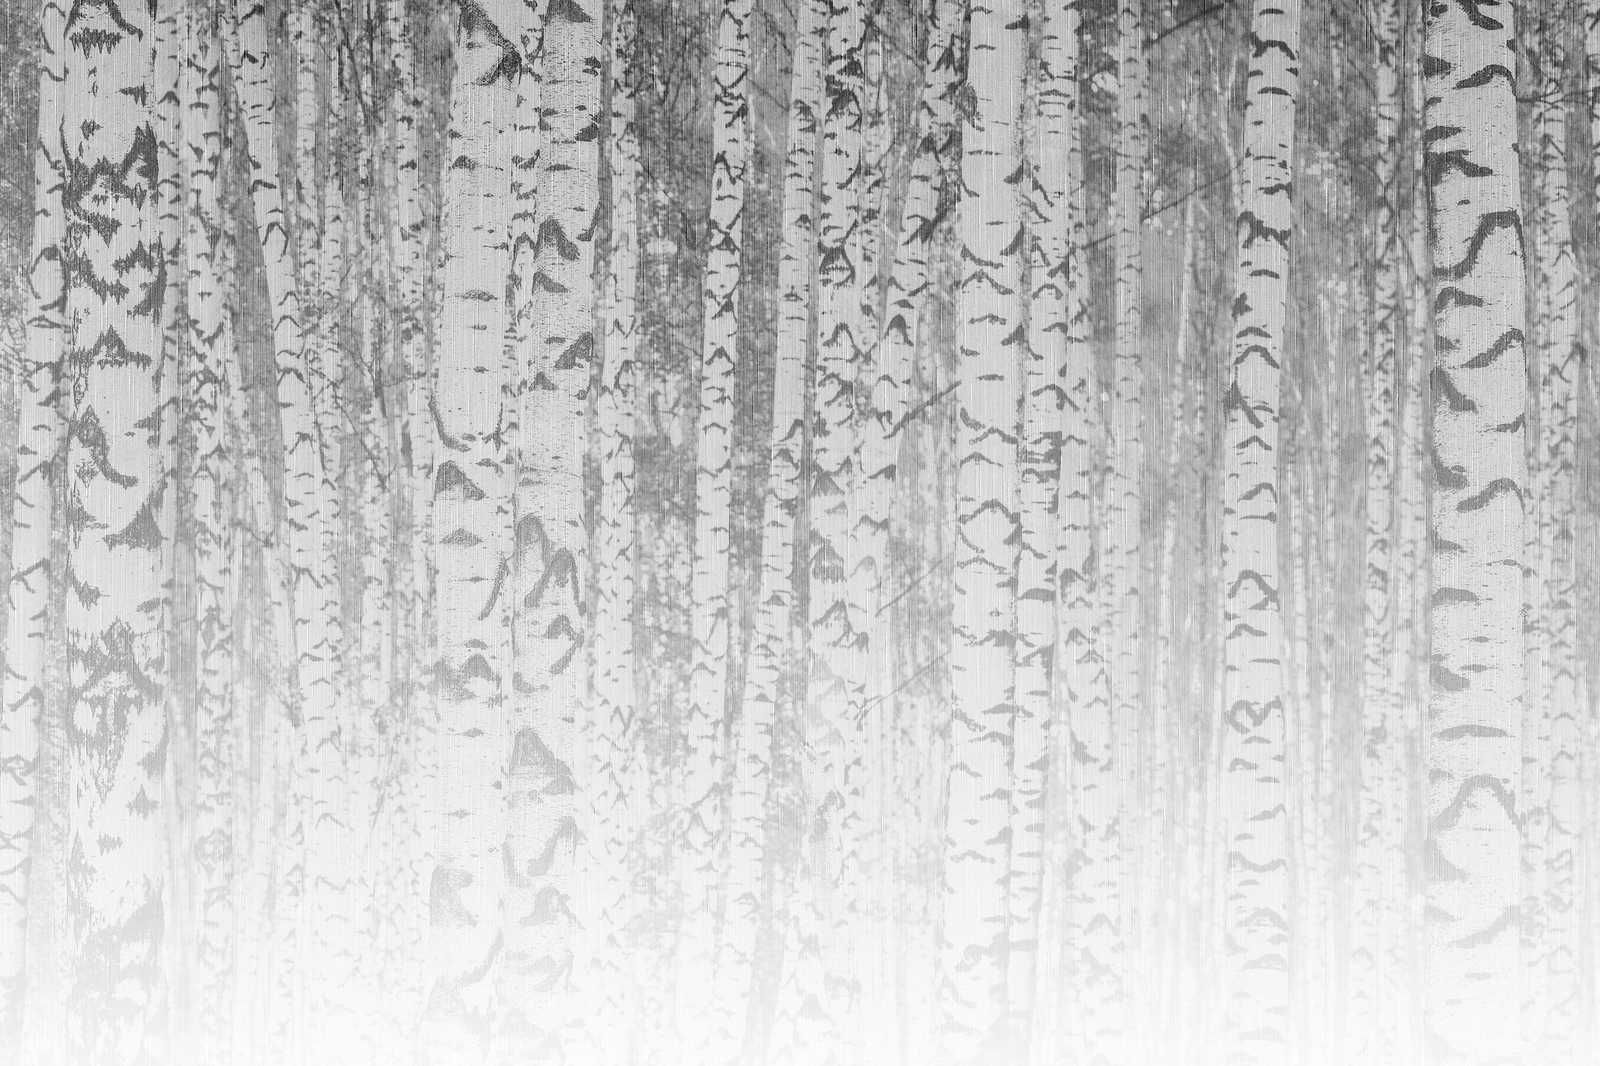             Cuadro en lienzo troncos claros de abedul en bosque brumoso - 0,90 m x 0,60 m
        